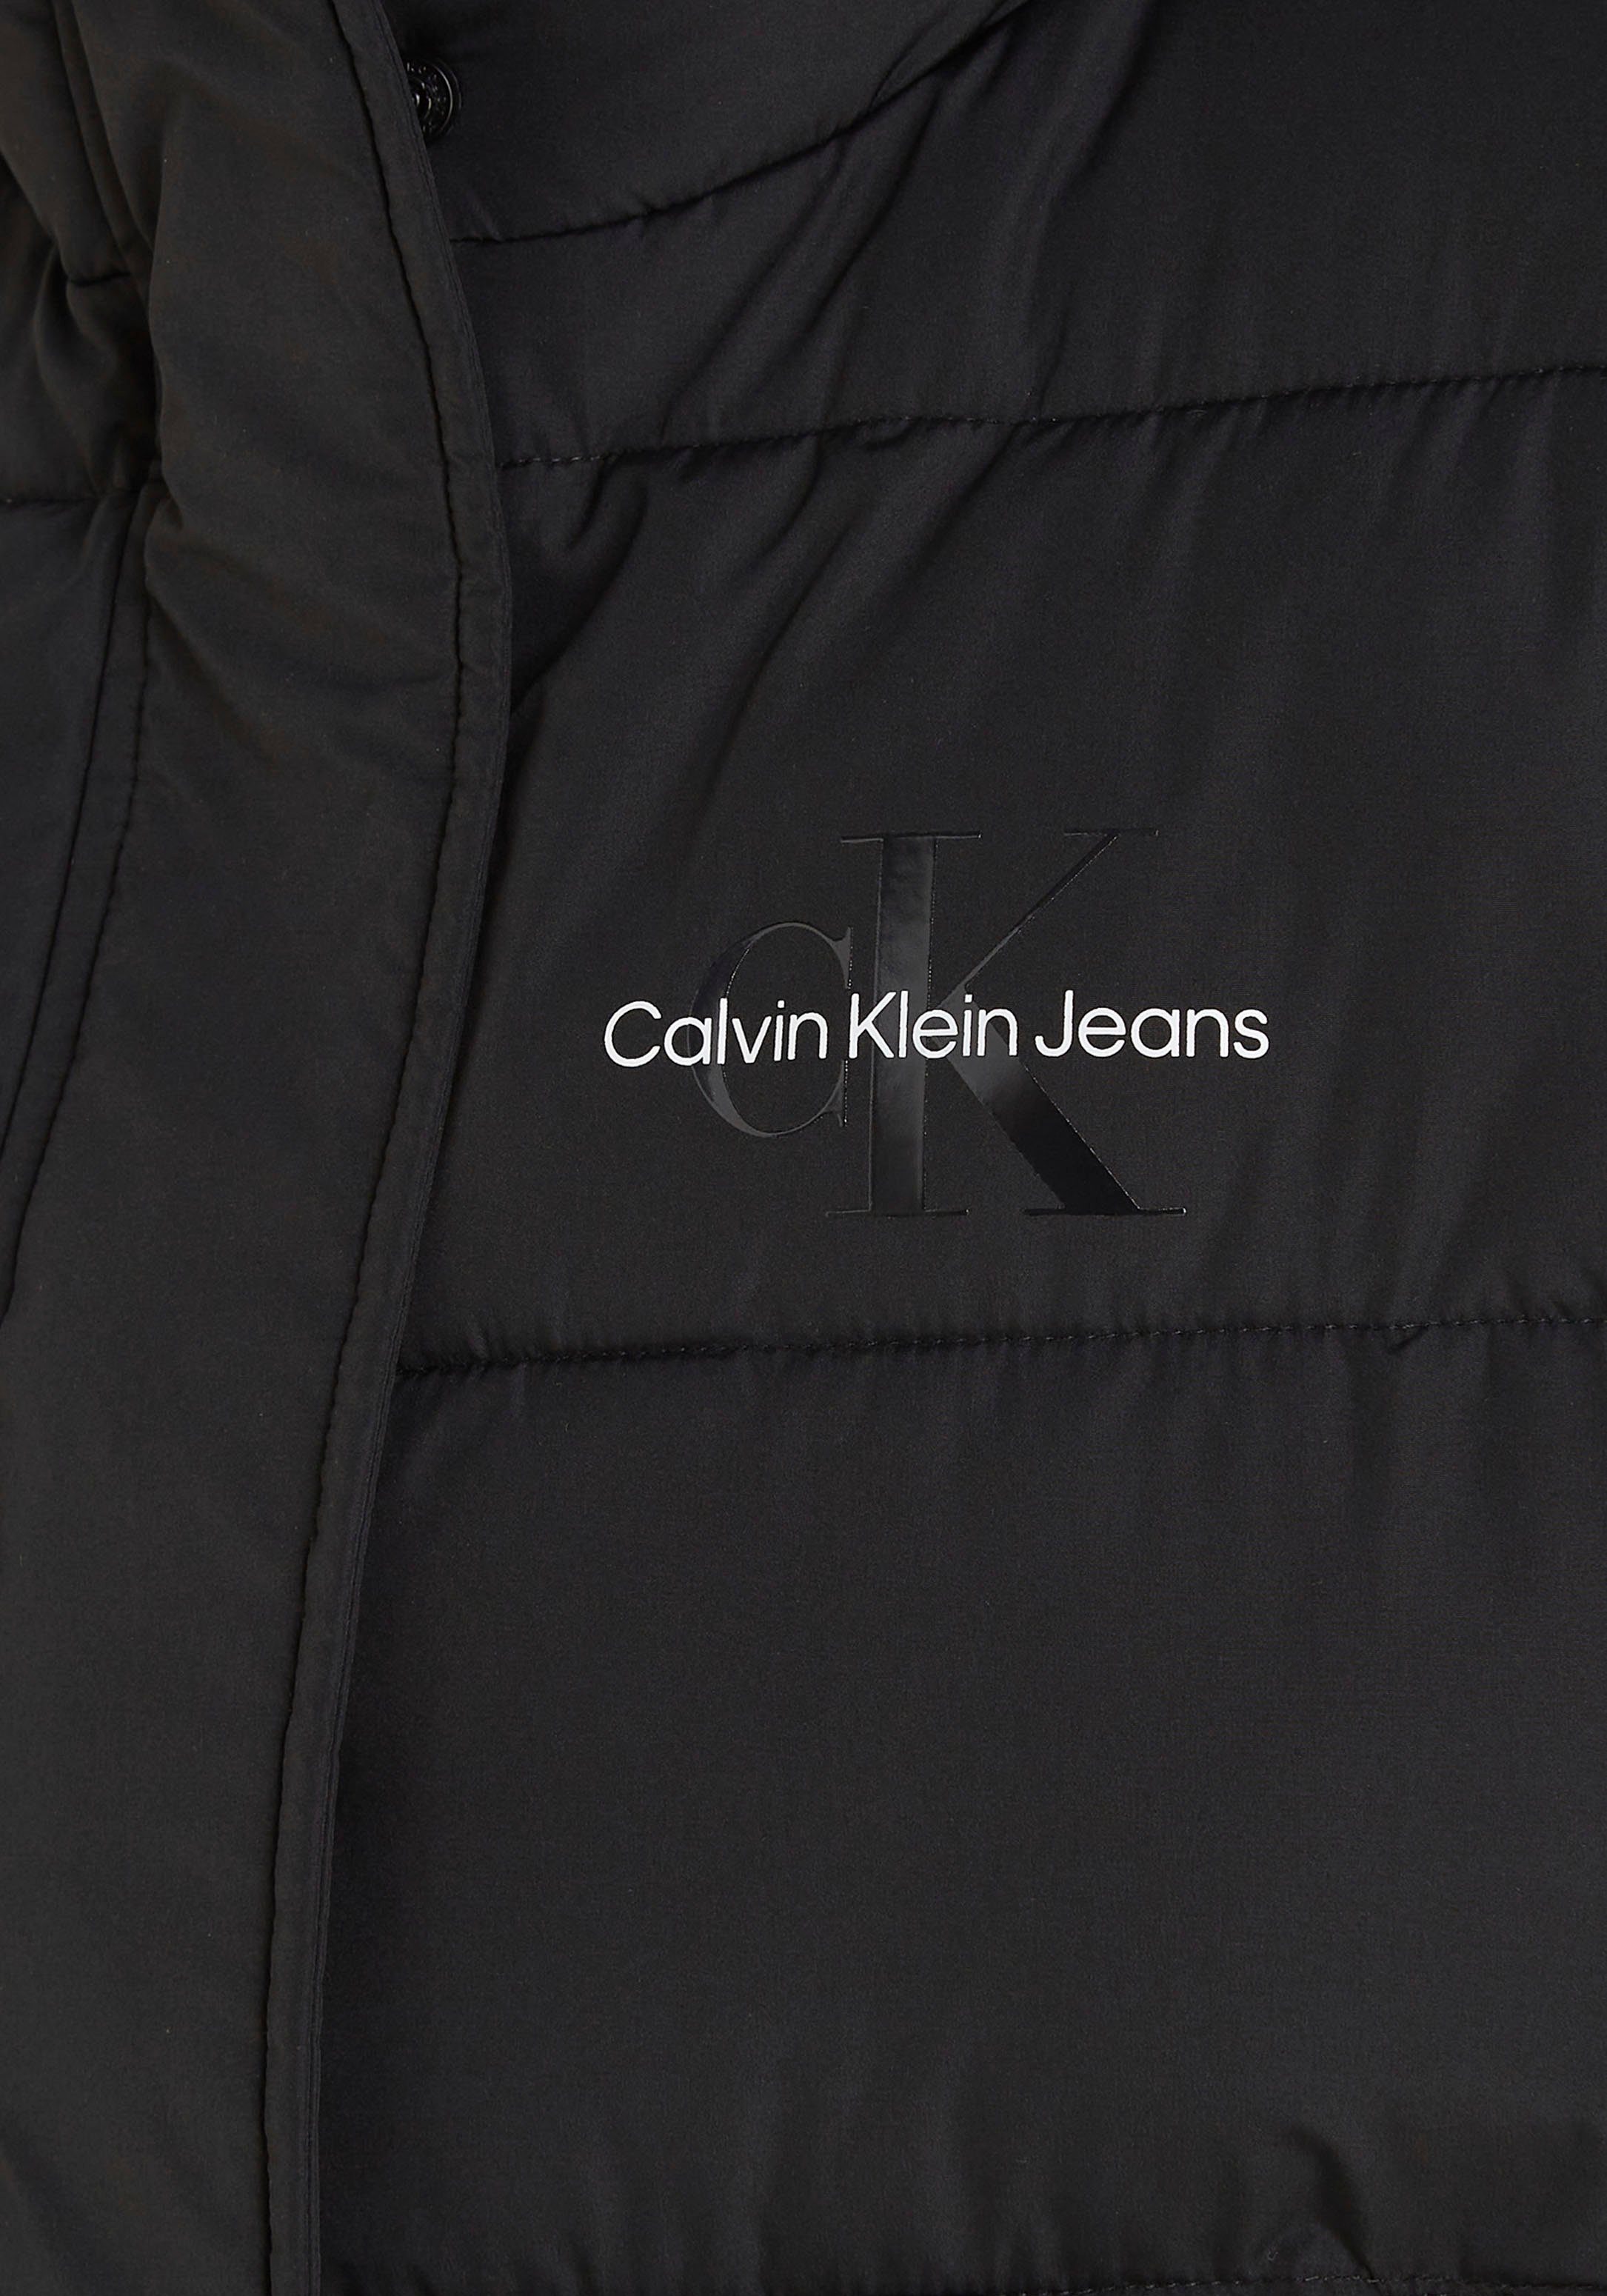 Jeans NON-DOWN Calvin Klein VEST MW Steppweste